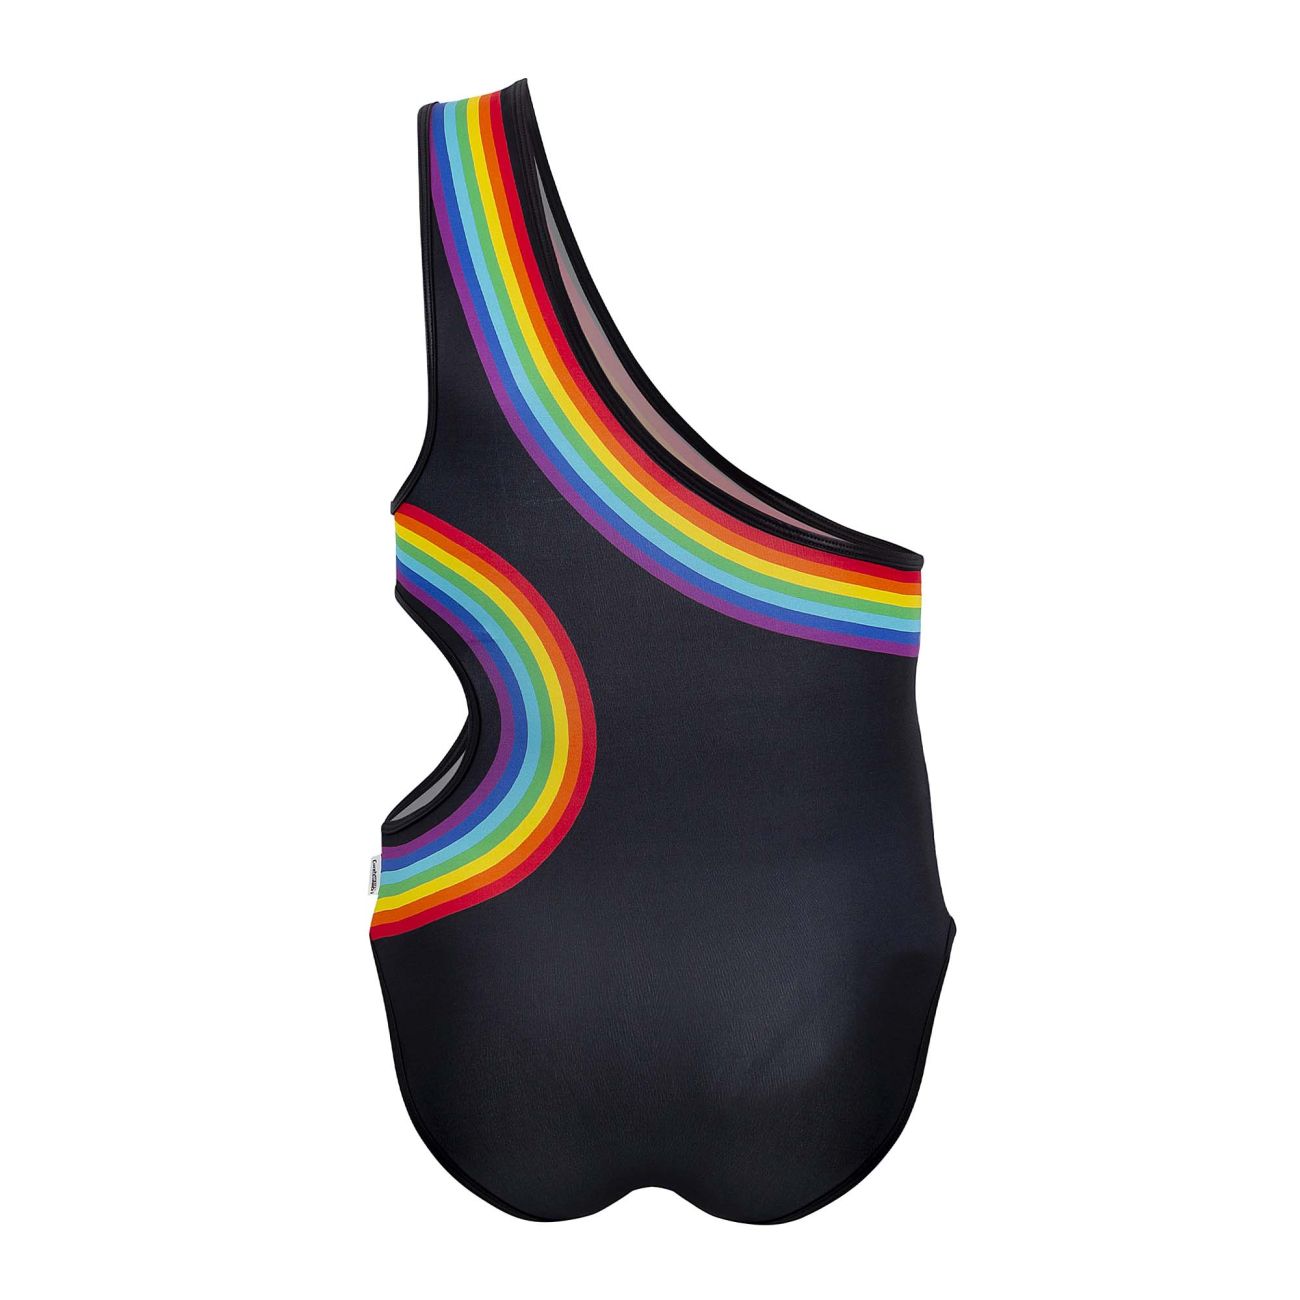 CandyMan 99702 Rainbow Bodysuit Black